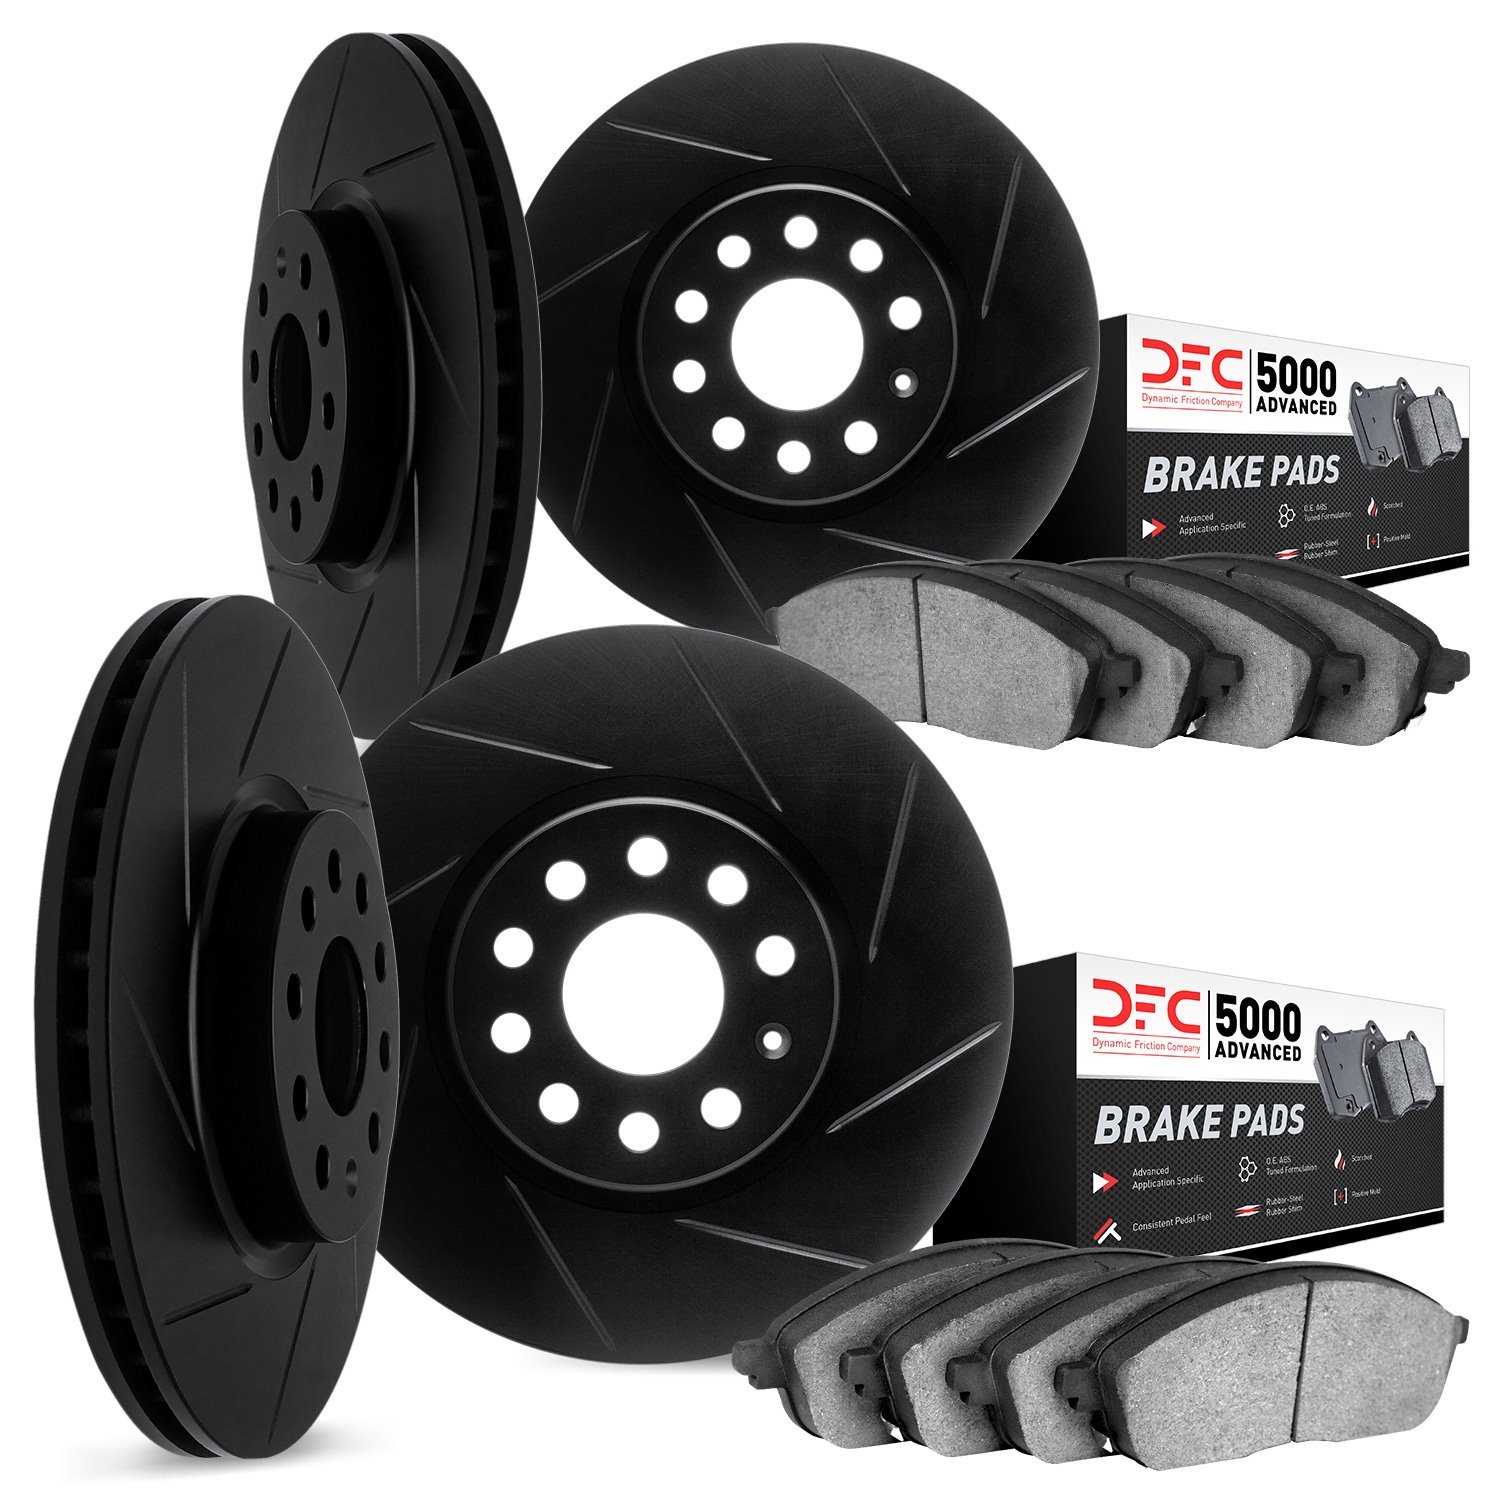 3514-67079 Slotted Brake Rotors w/5000 Advanced Brake Pads Kit & Hardware [Black], Fits Select Multiple Makes/Models, Position: